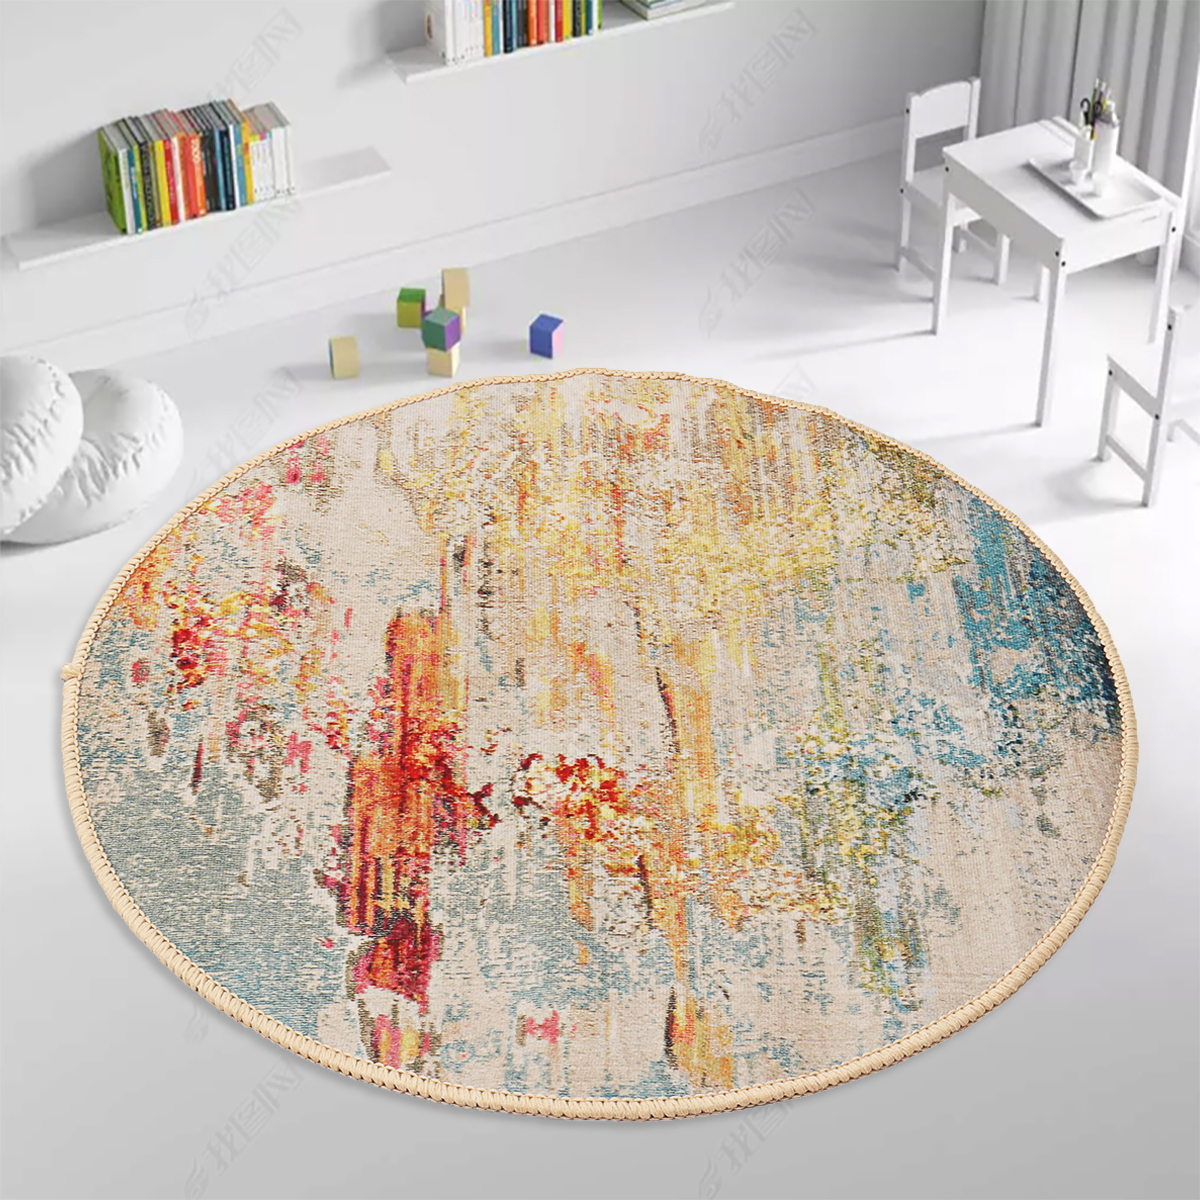 Circular-Floor-Rug-Carpet-Anti-Slip-Living-Room-Bedside-Kitchen-Mat-1814618-2